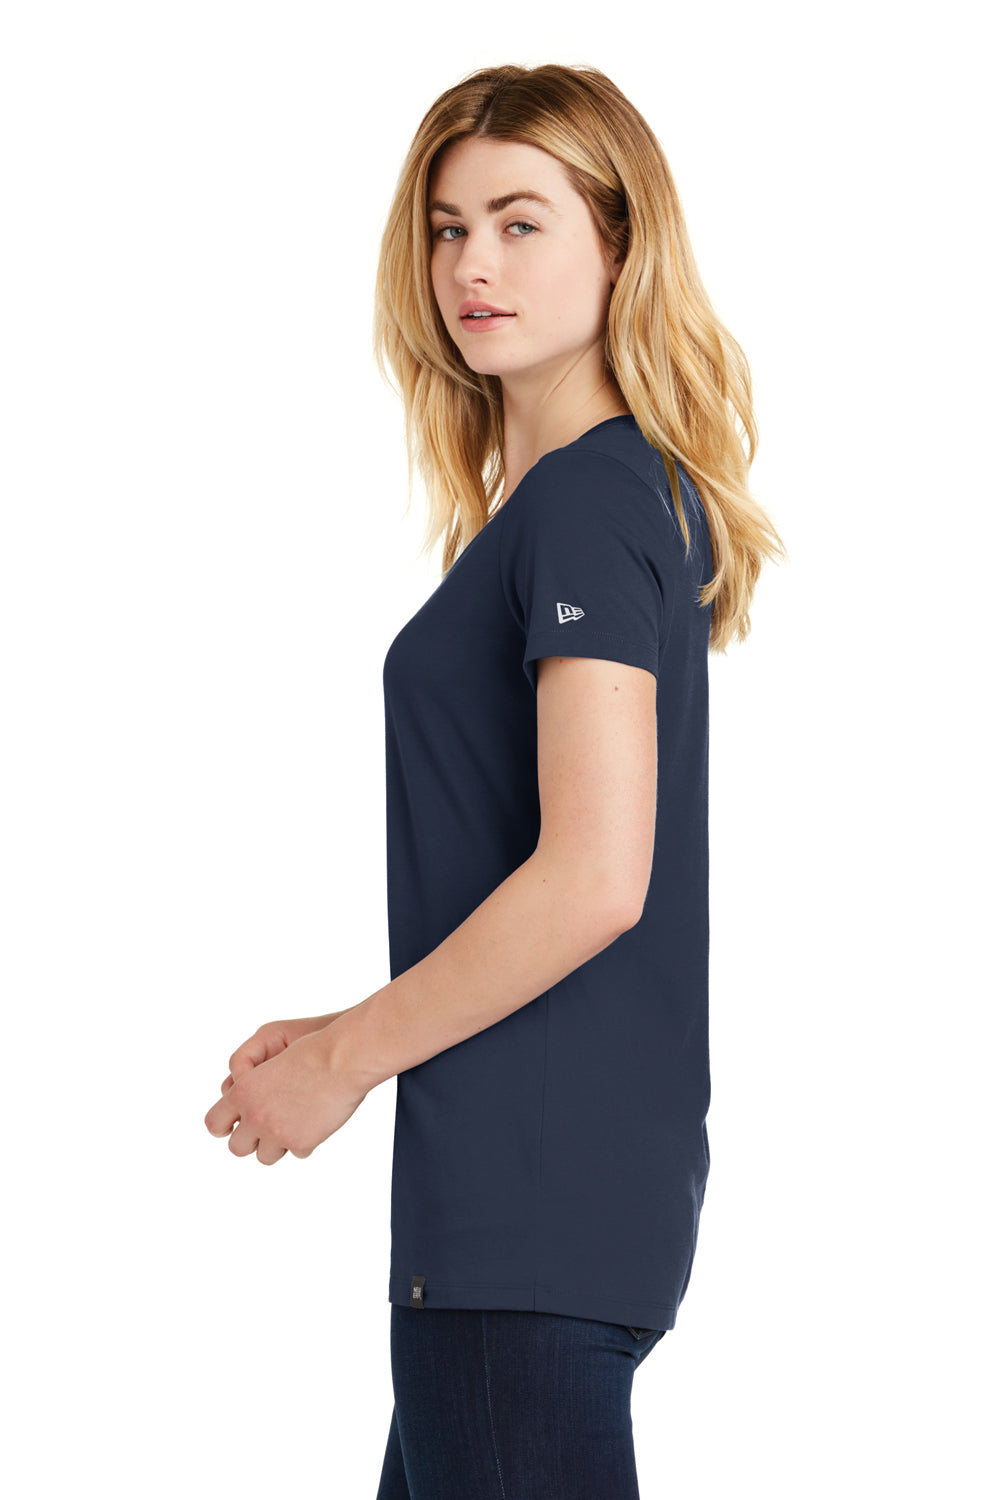 New Era LNEA101 Womens Heritage Short Sleeve V-Neck T-Shirt Navy Blue Side